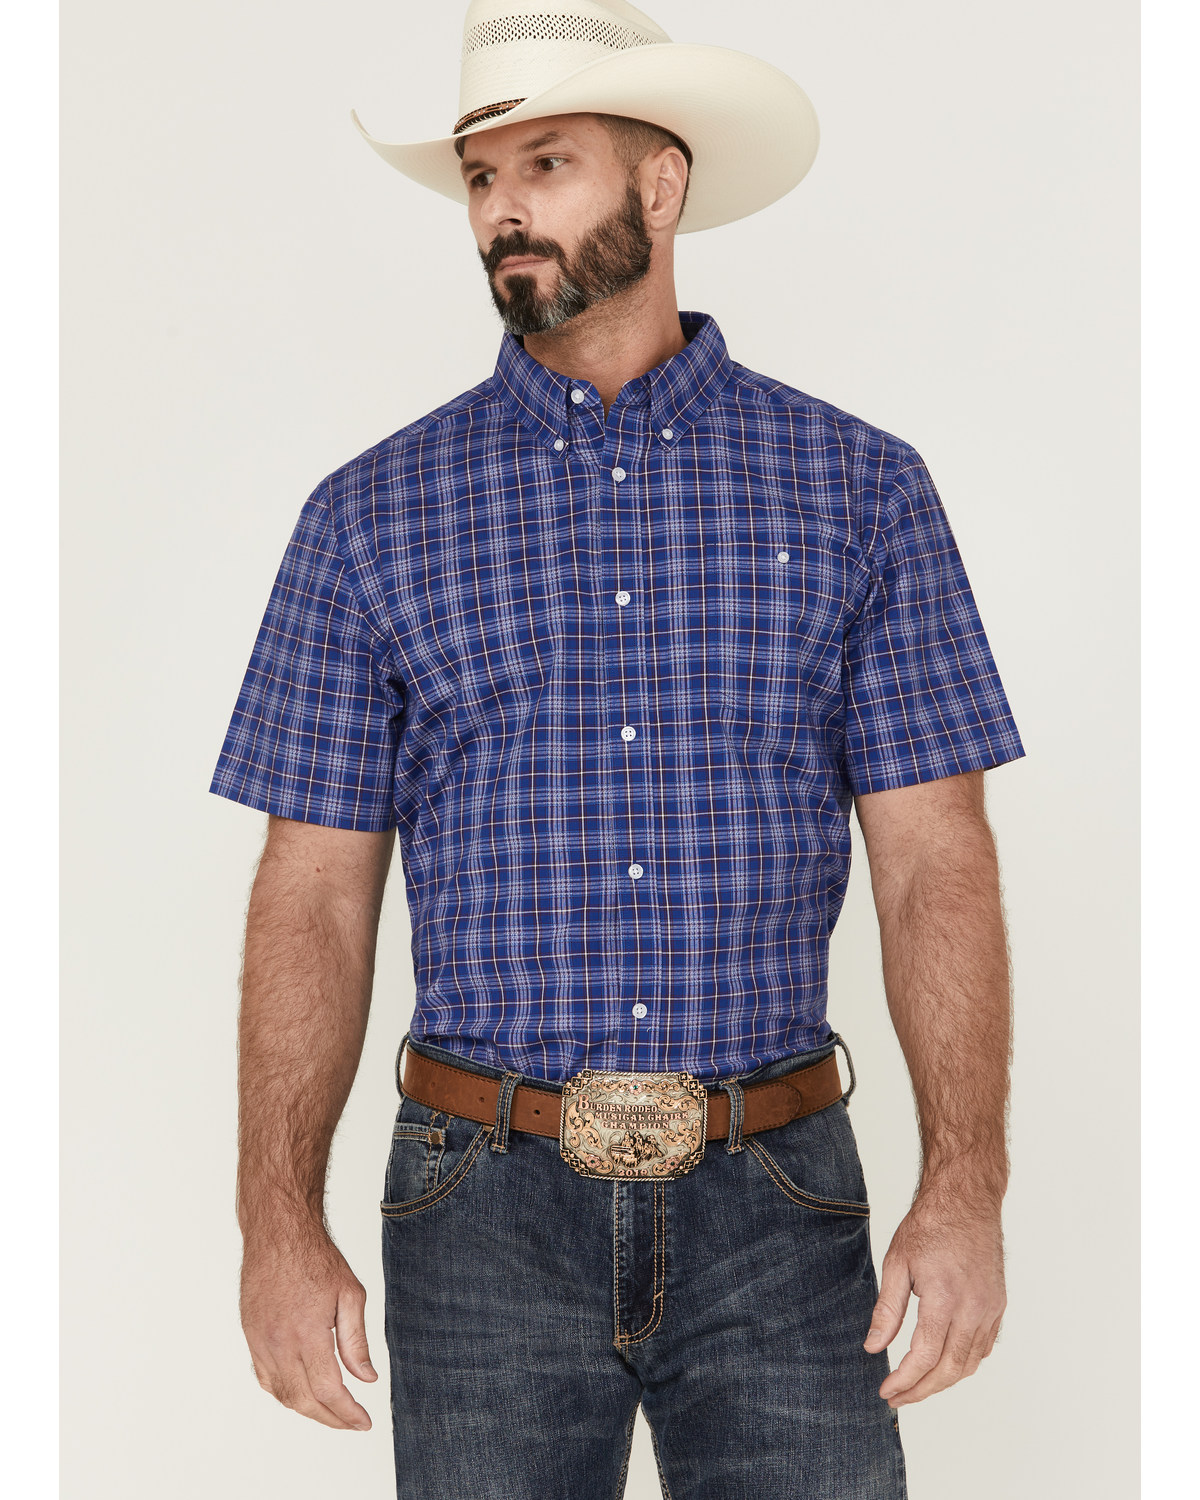 RANK 45® Men's Charge Small Plaid Print Button-Down Western Shirt